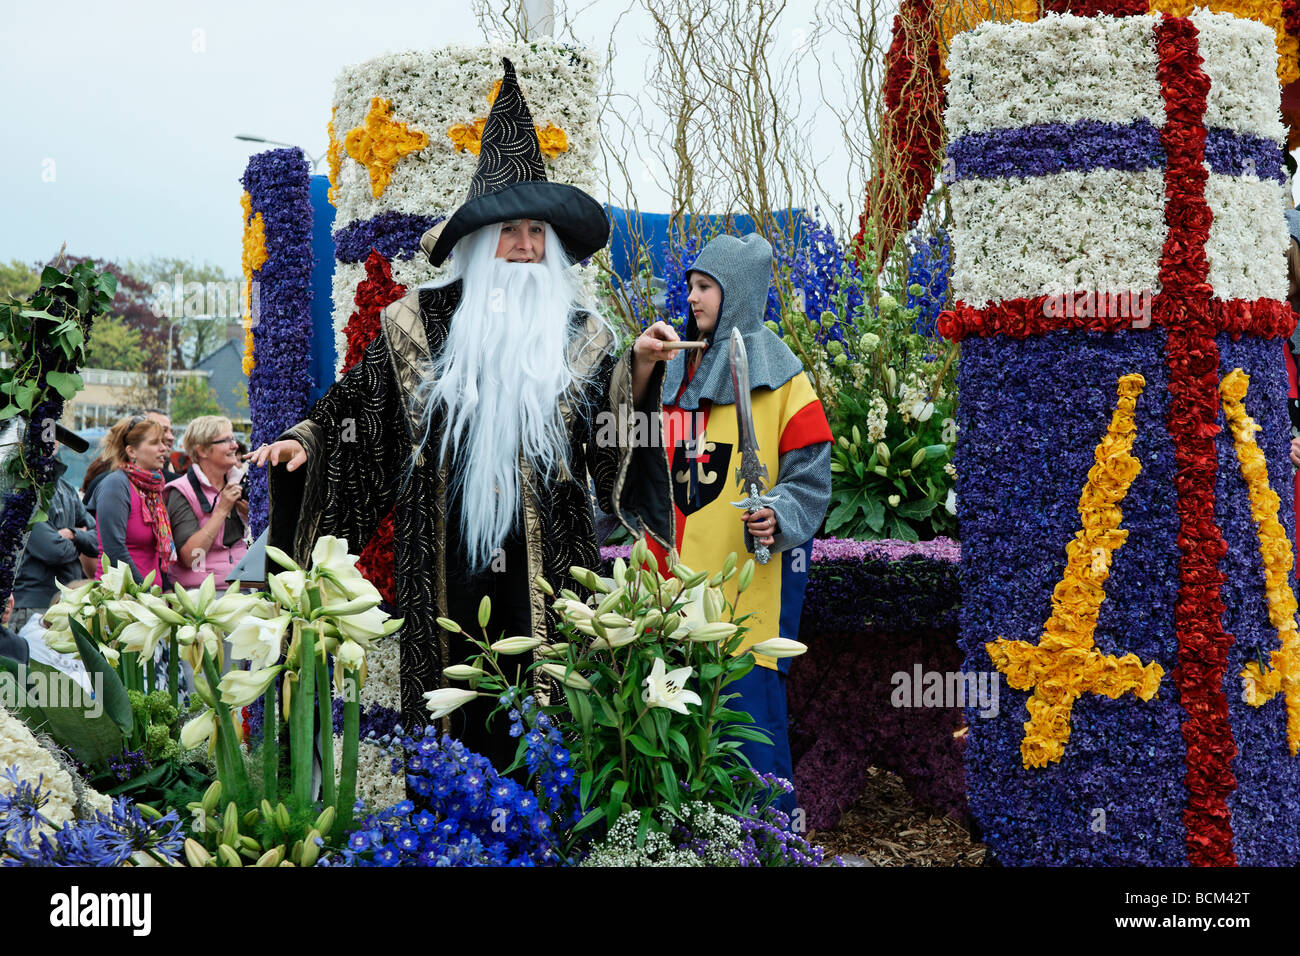 Die 2009 Bloemencorso, Blumenkorso in der Bollenstreek, Südholland, Niederlande. Stockfoto